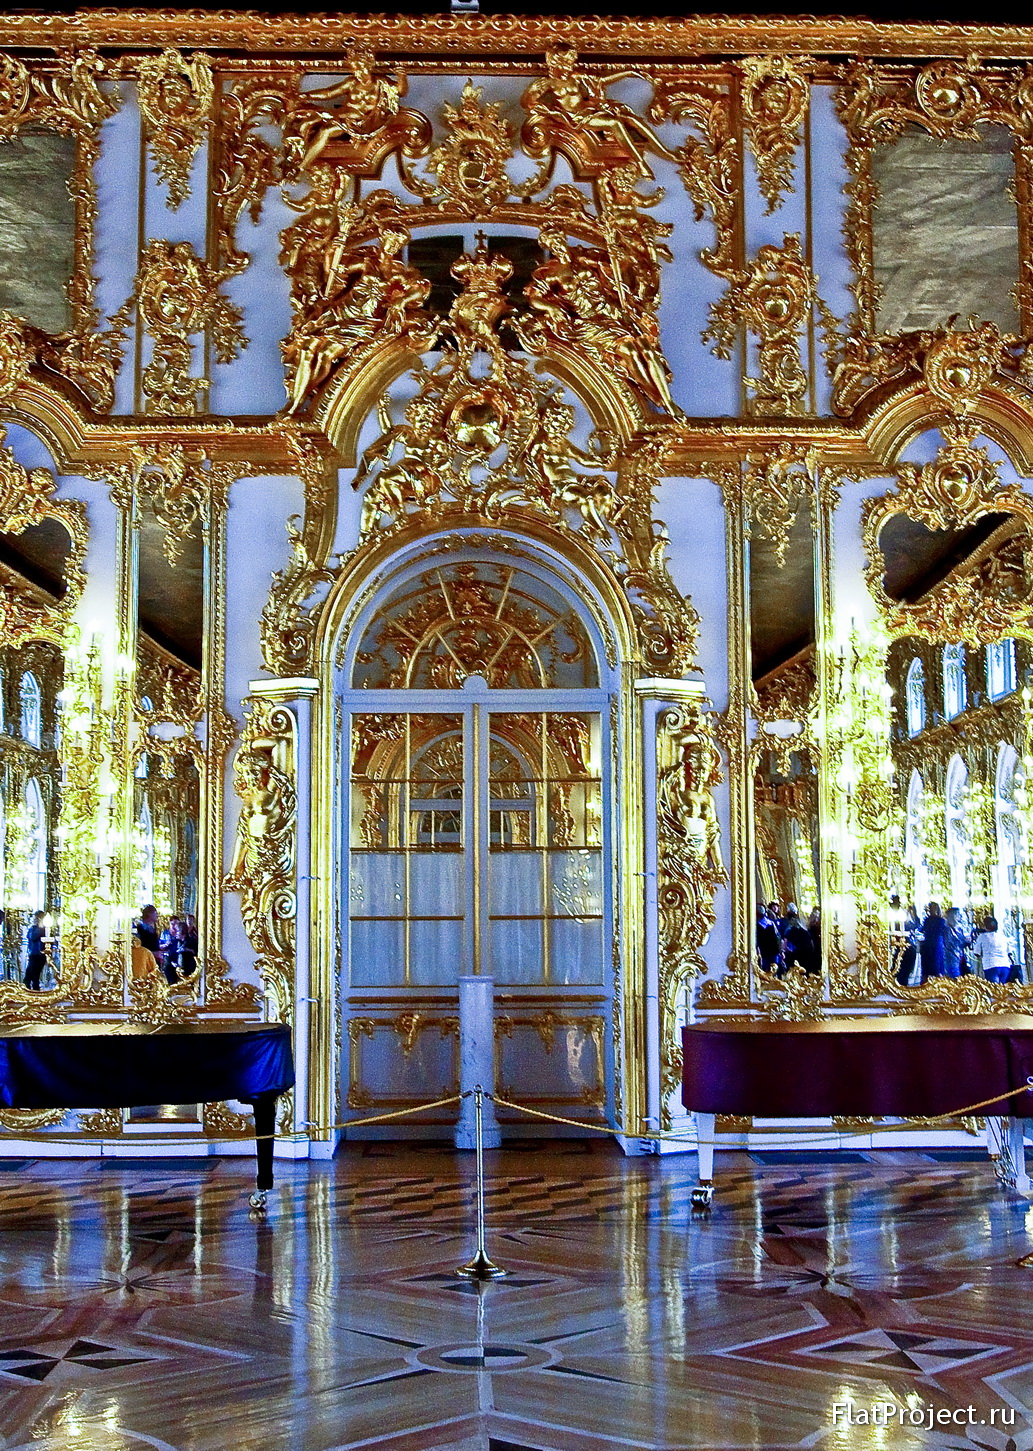 The Catherine Palace interiors – photo 327